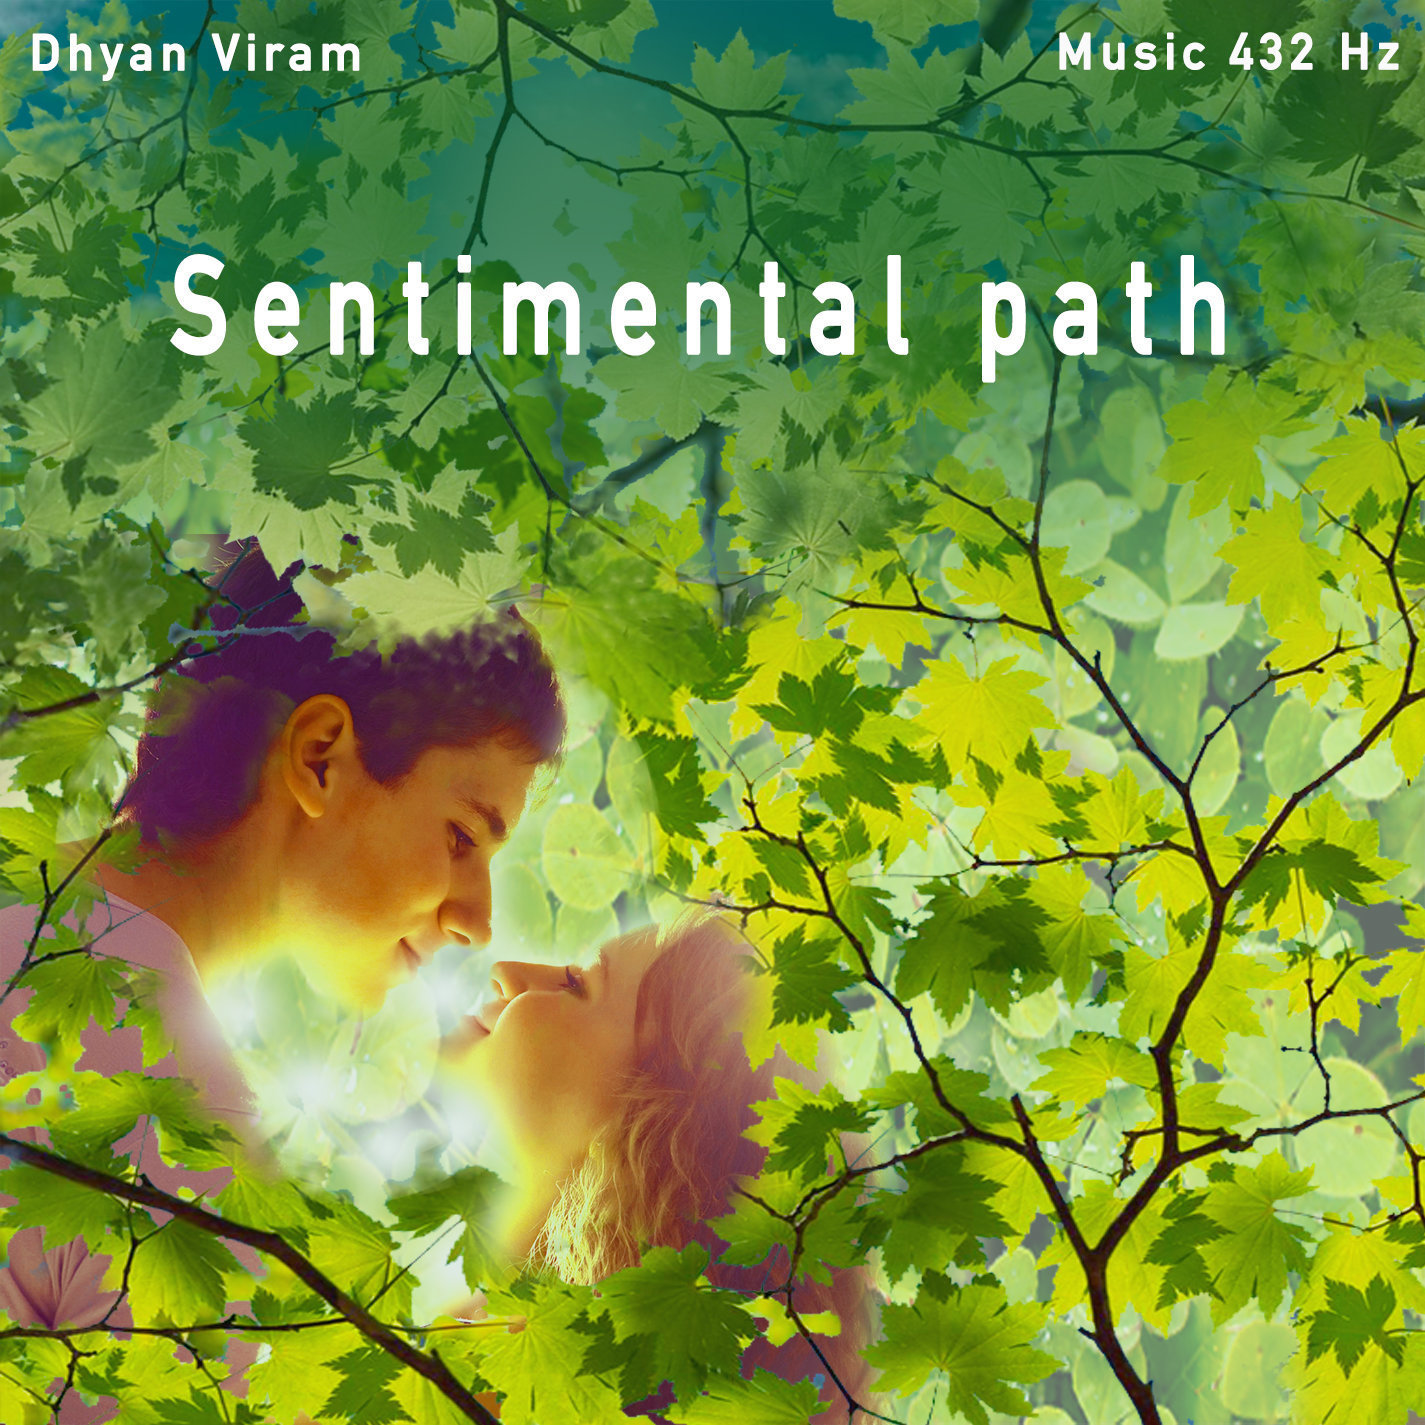 Sentimental path